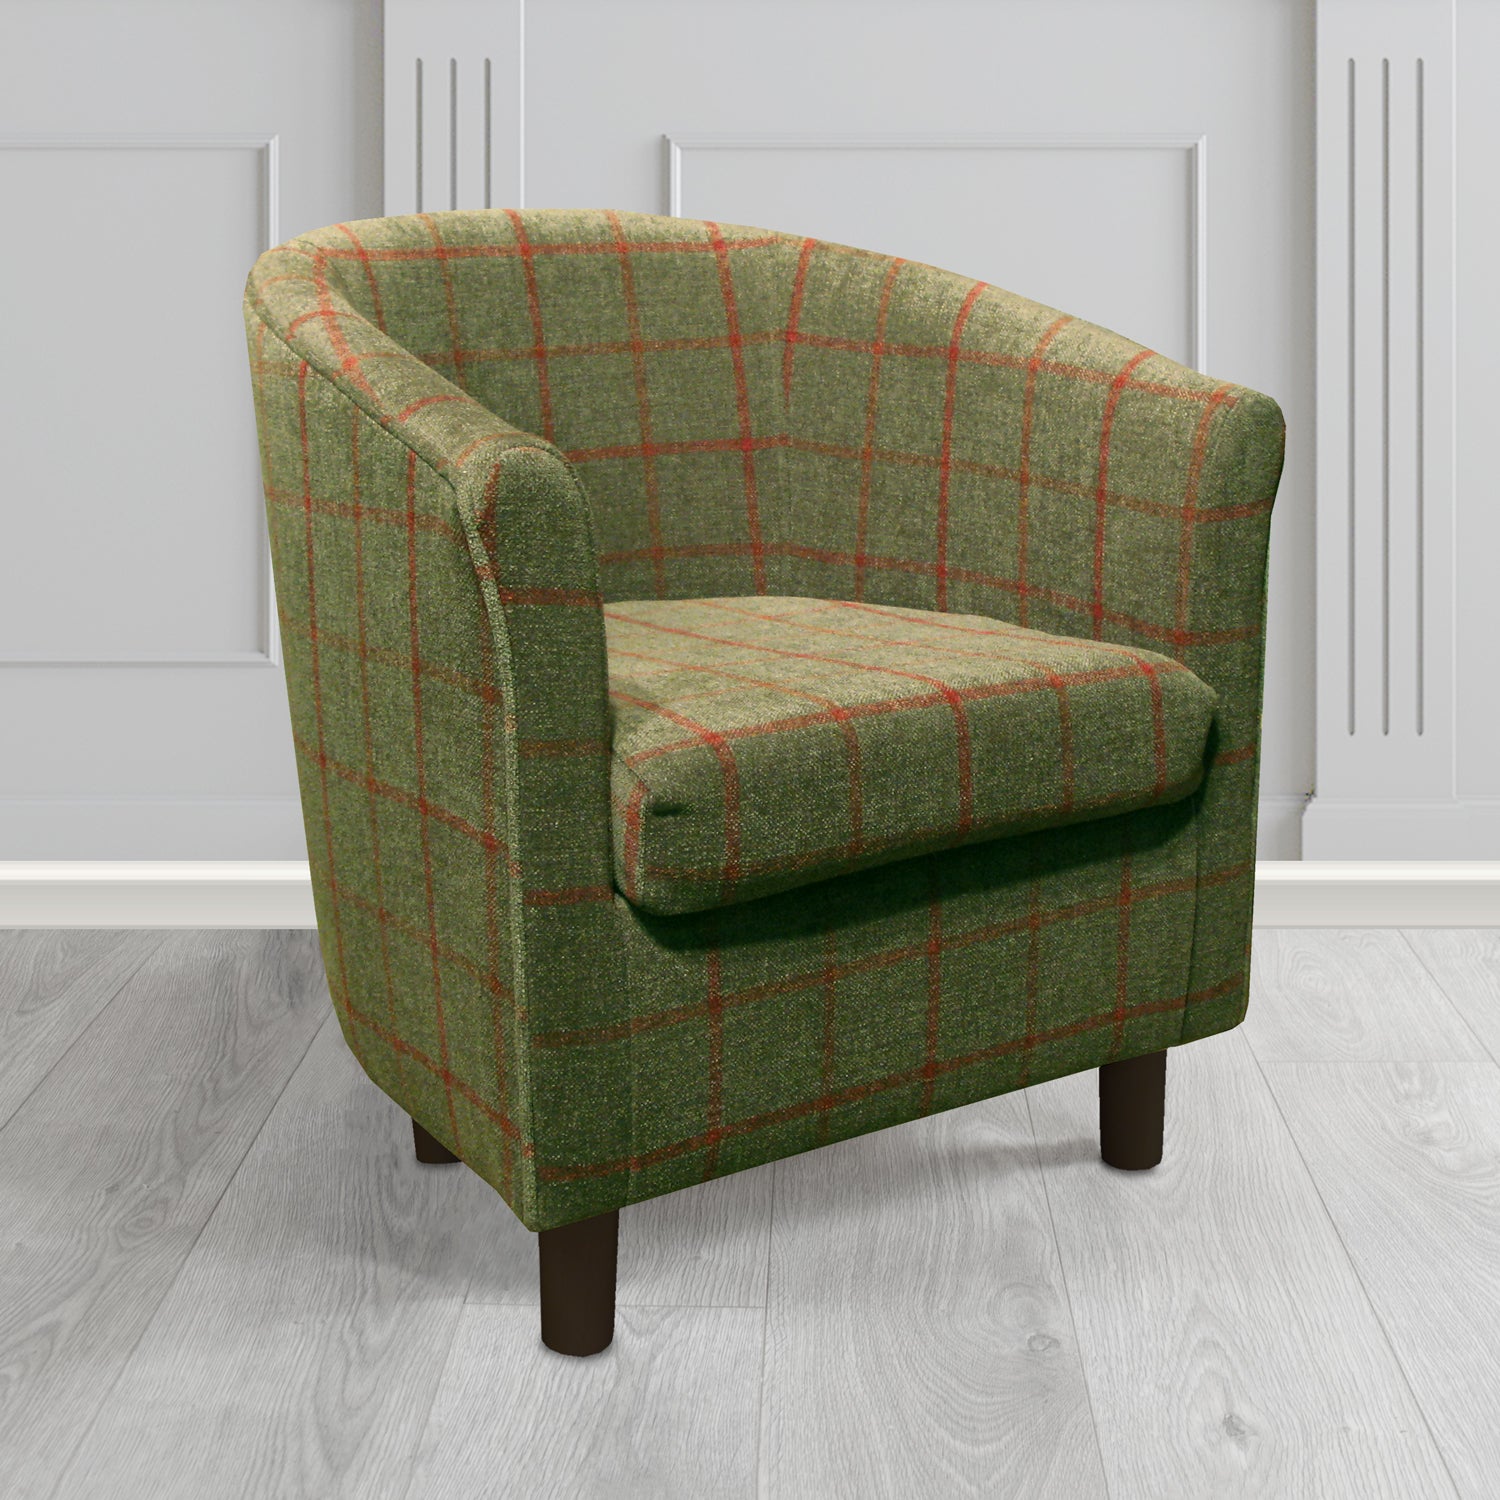 Tuscany Tub Chair in Lana Moss Check Tartan LAN1264 Crib 5 Fabric